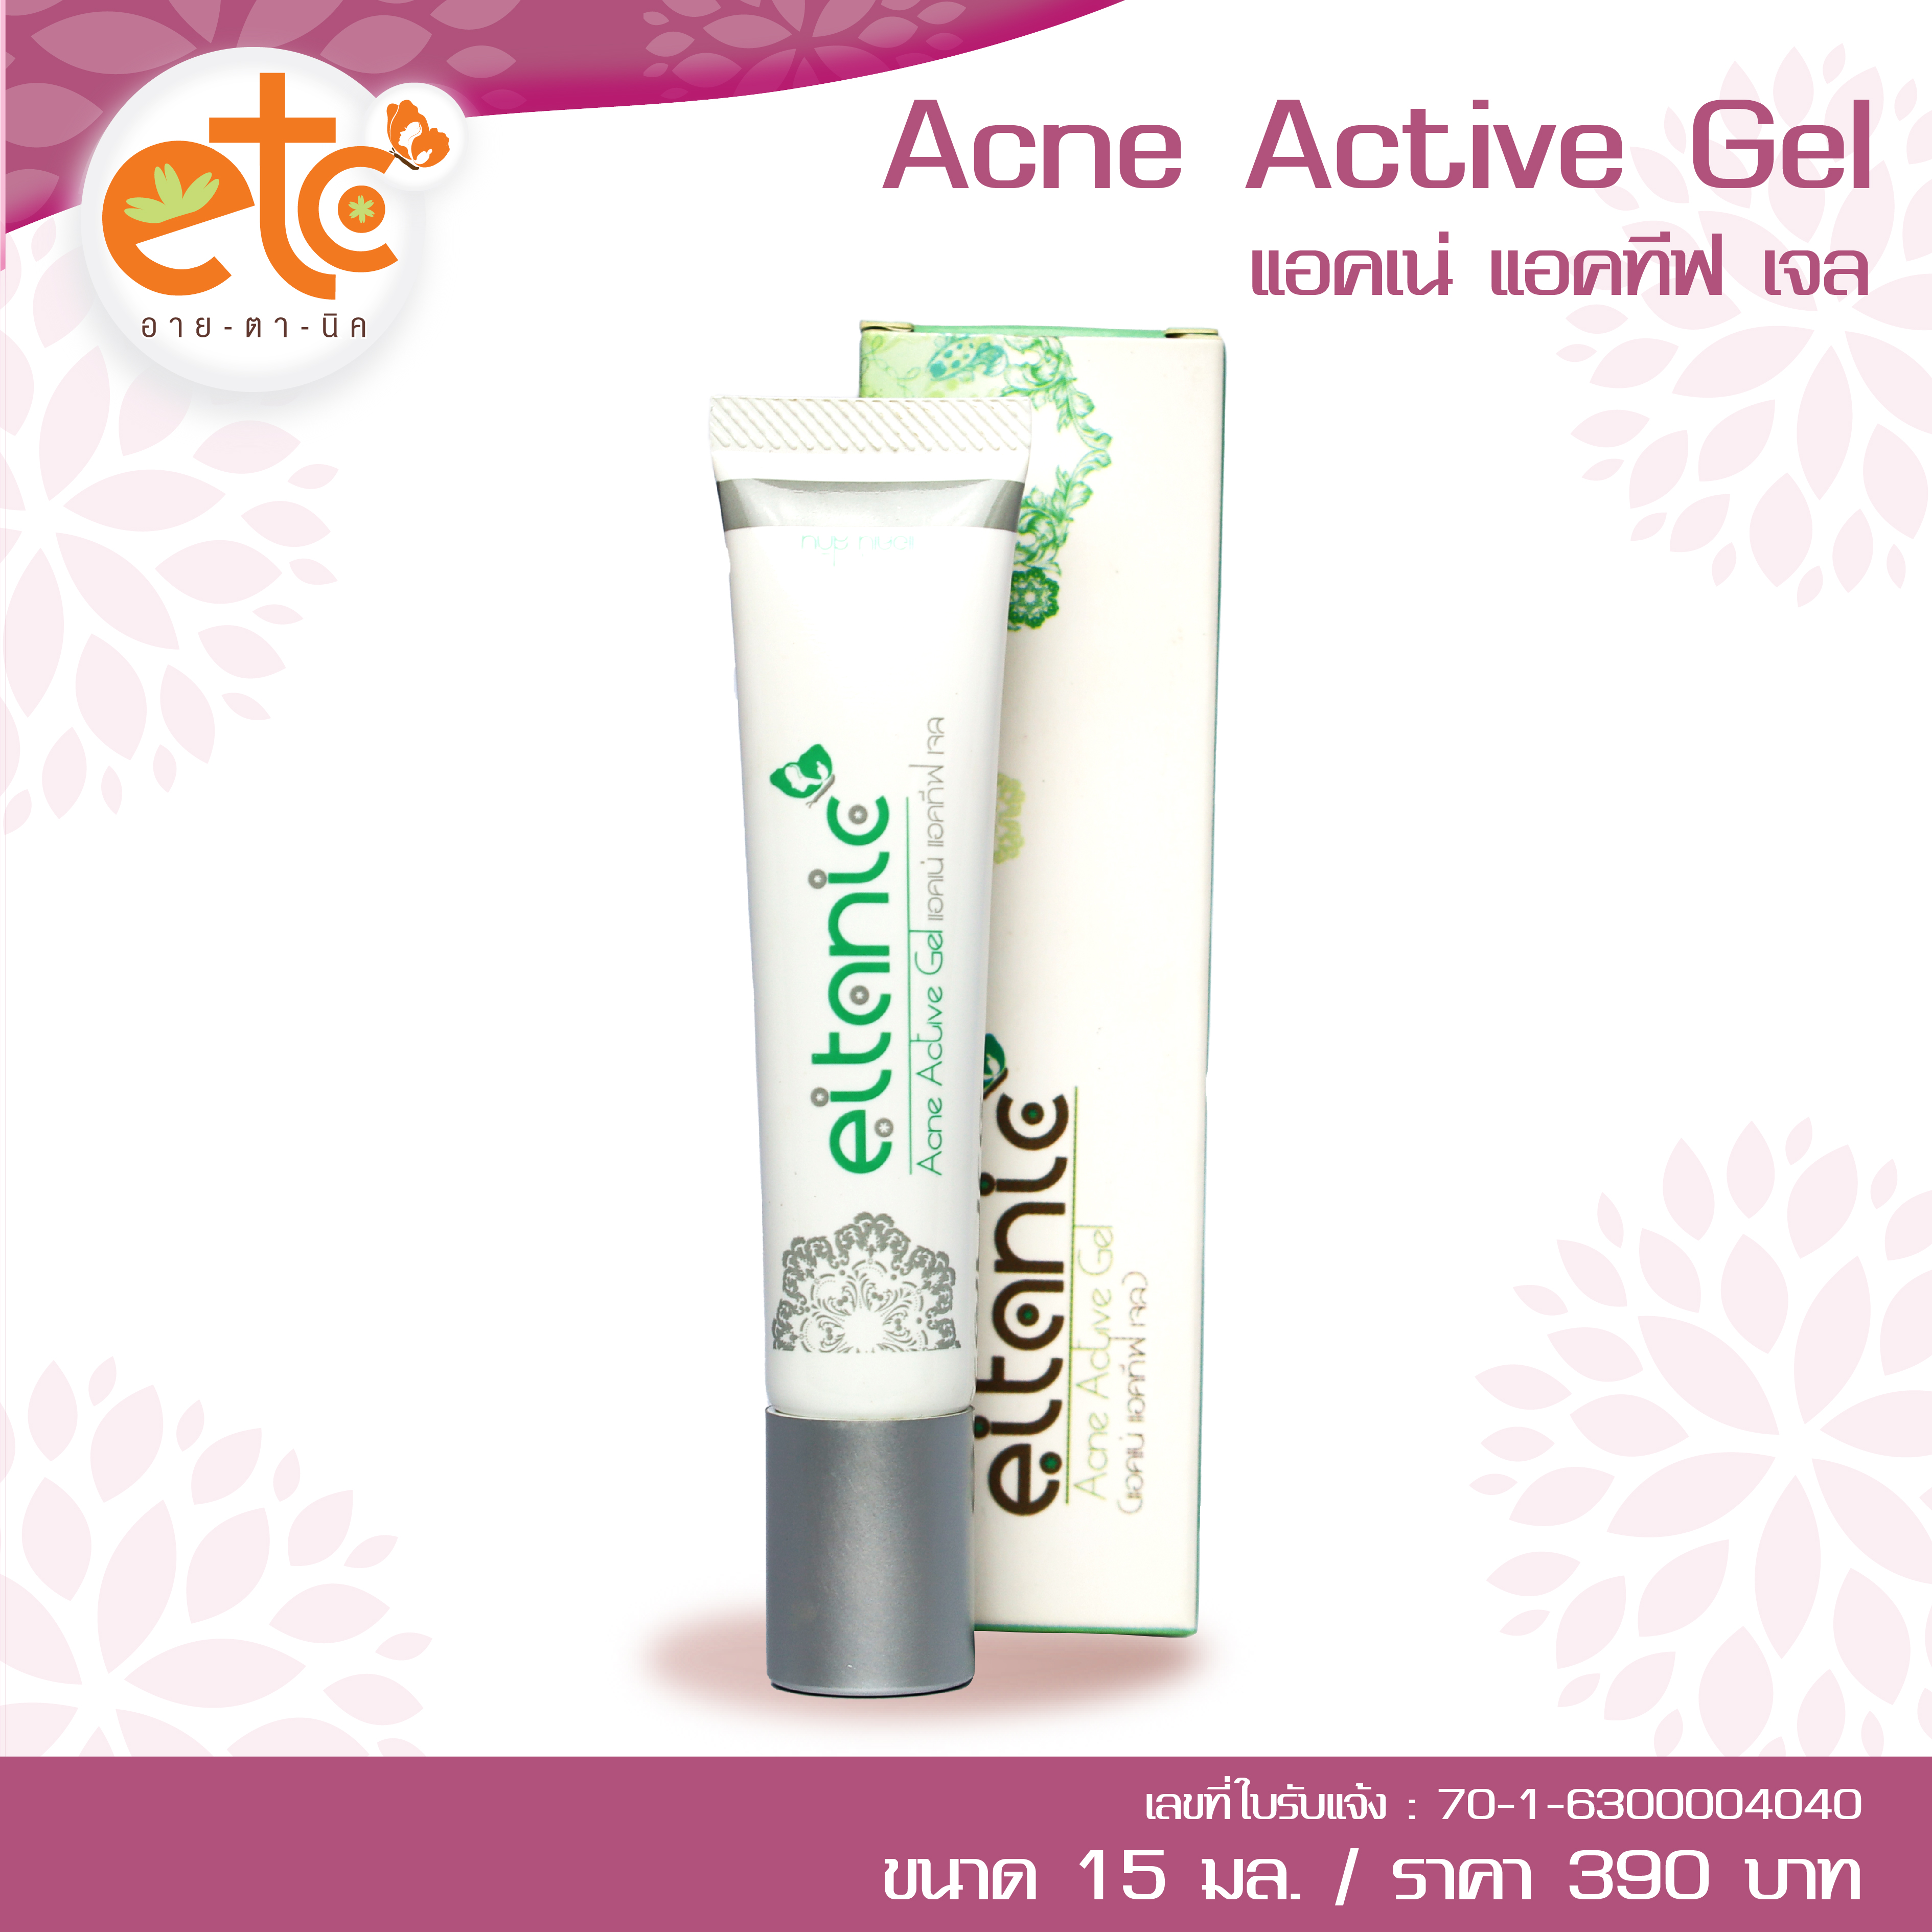 Acne Active Gel